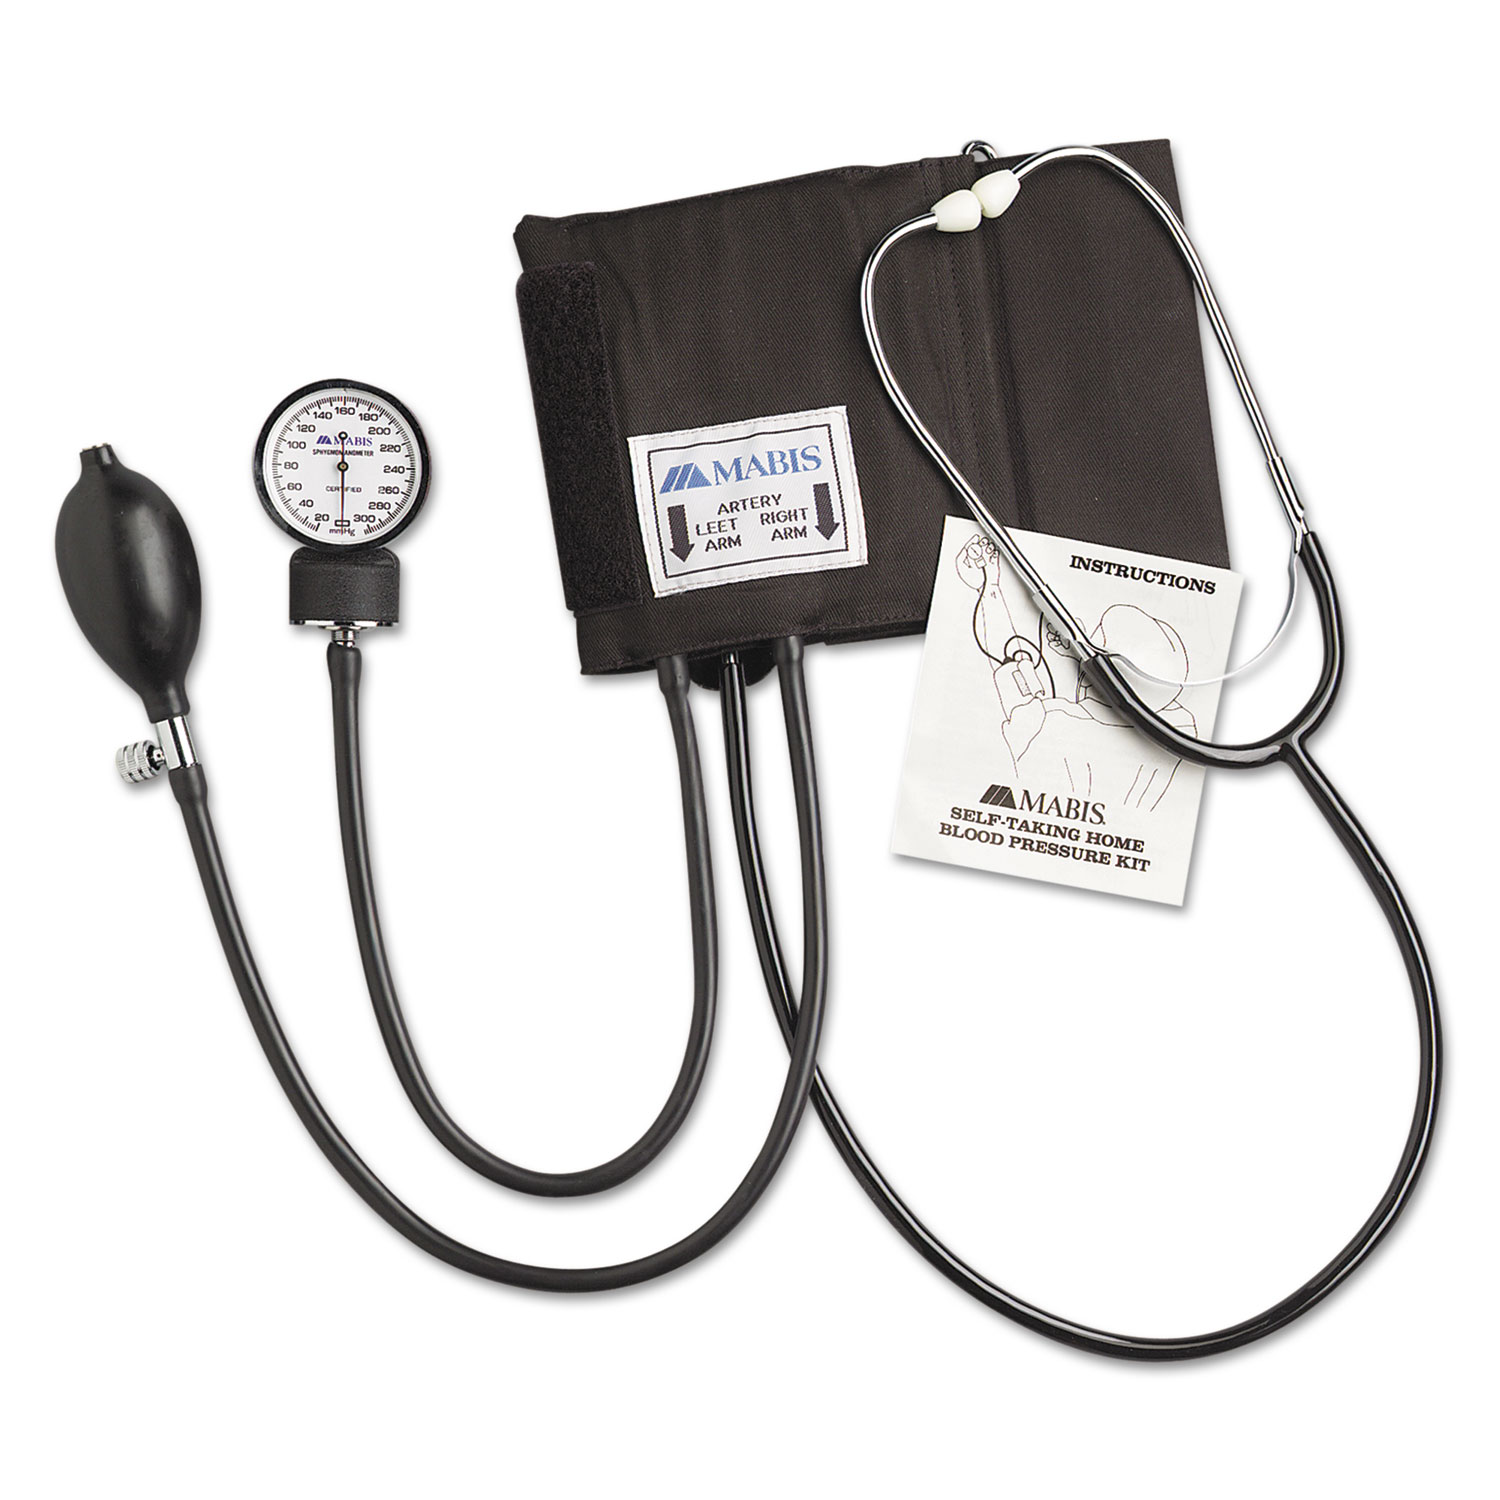 Self-Taking Home Blood Pressure Kit, 22 Stethoscope, Adult